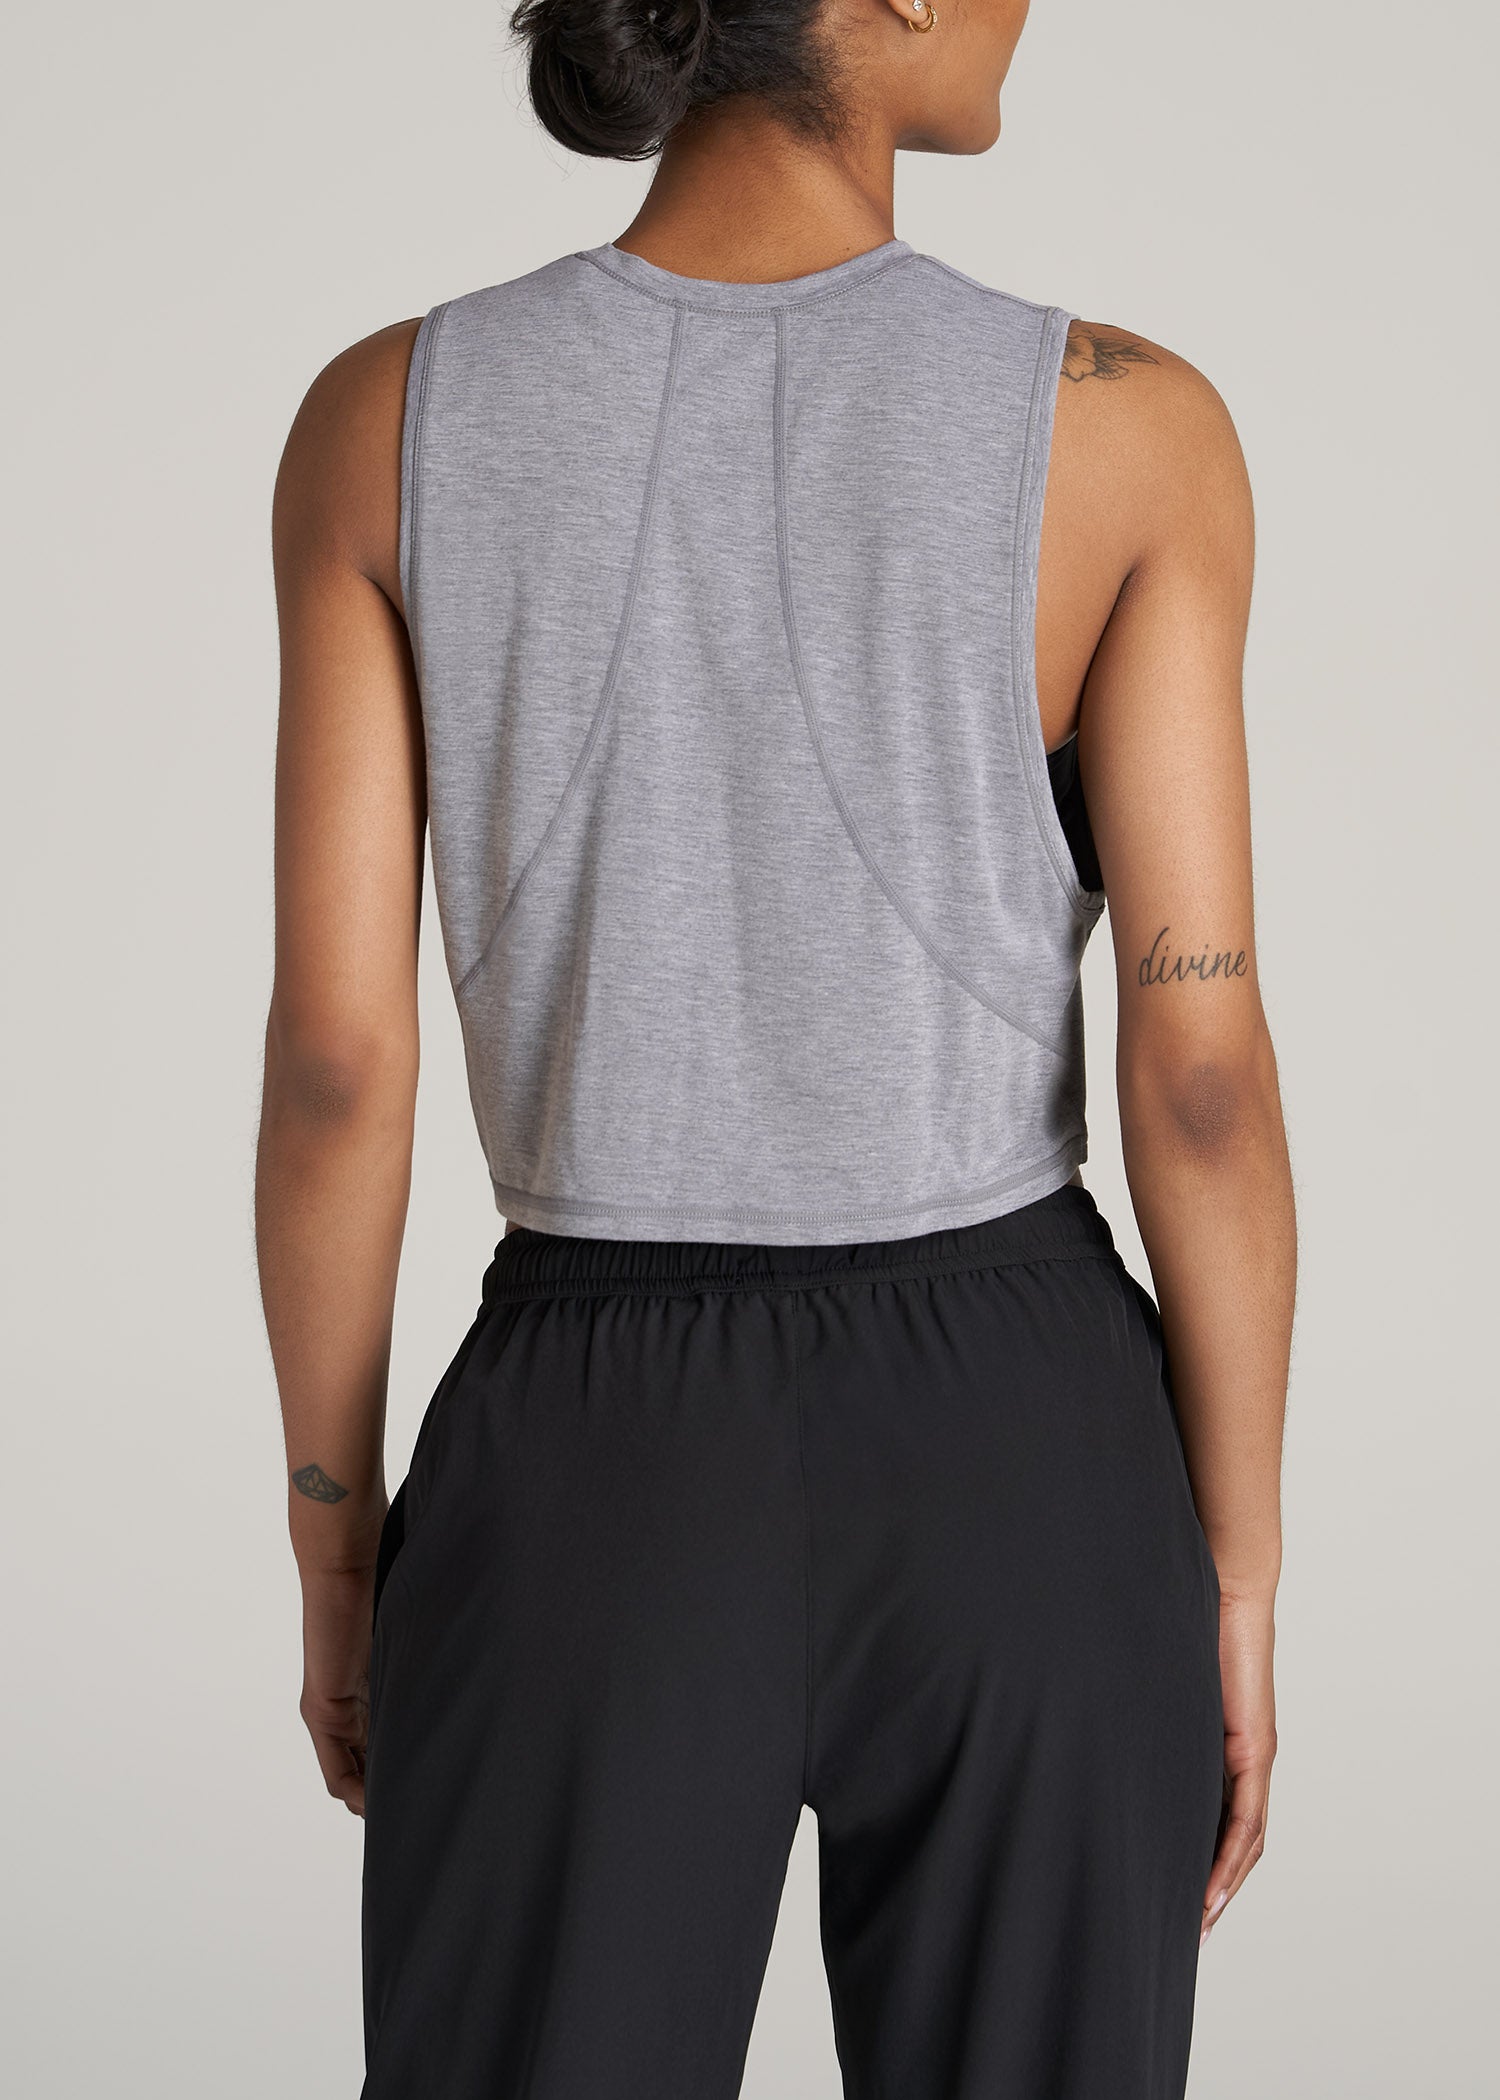 Lululemon Tank Top Womens Activewear Sleeveless Gray Long Muscle Tee Size: ~ 10